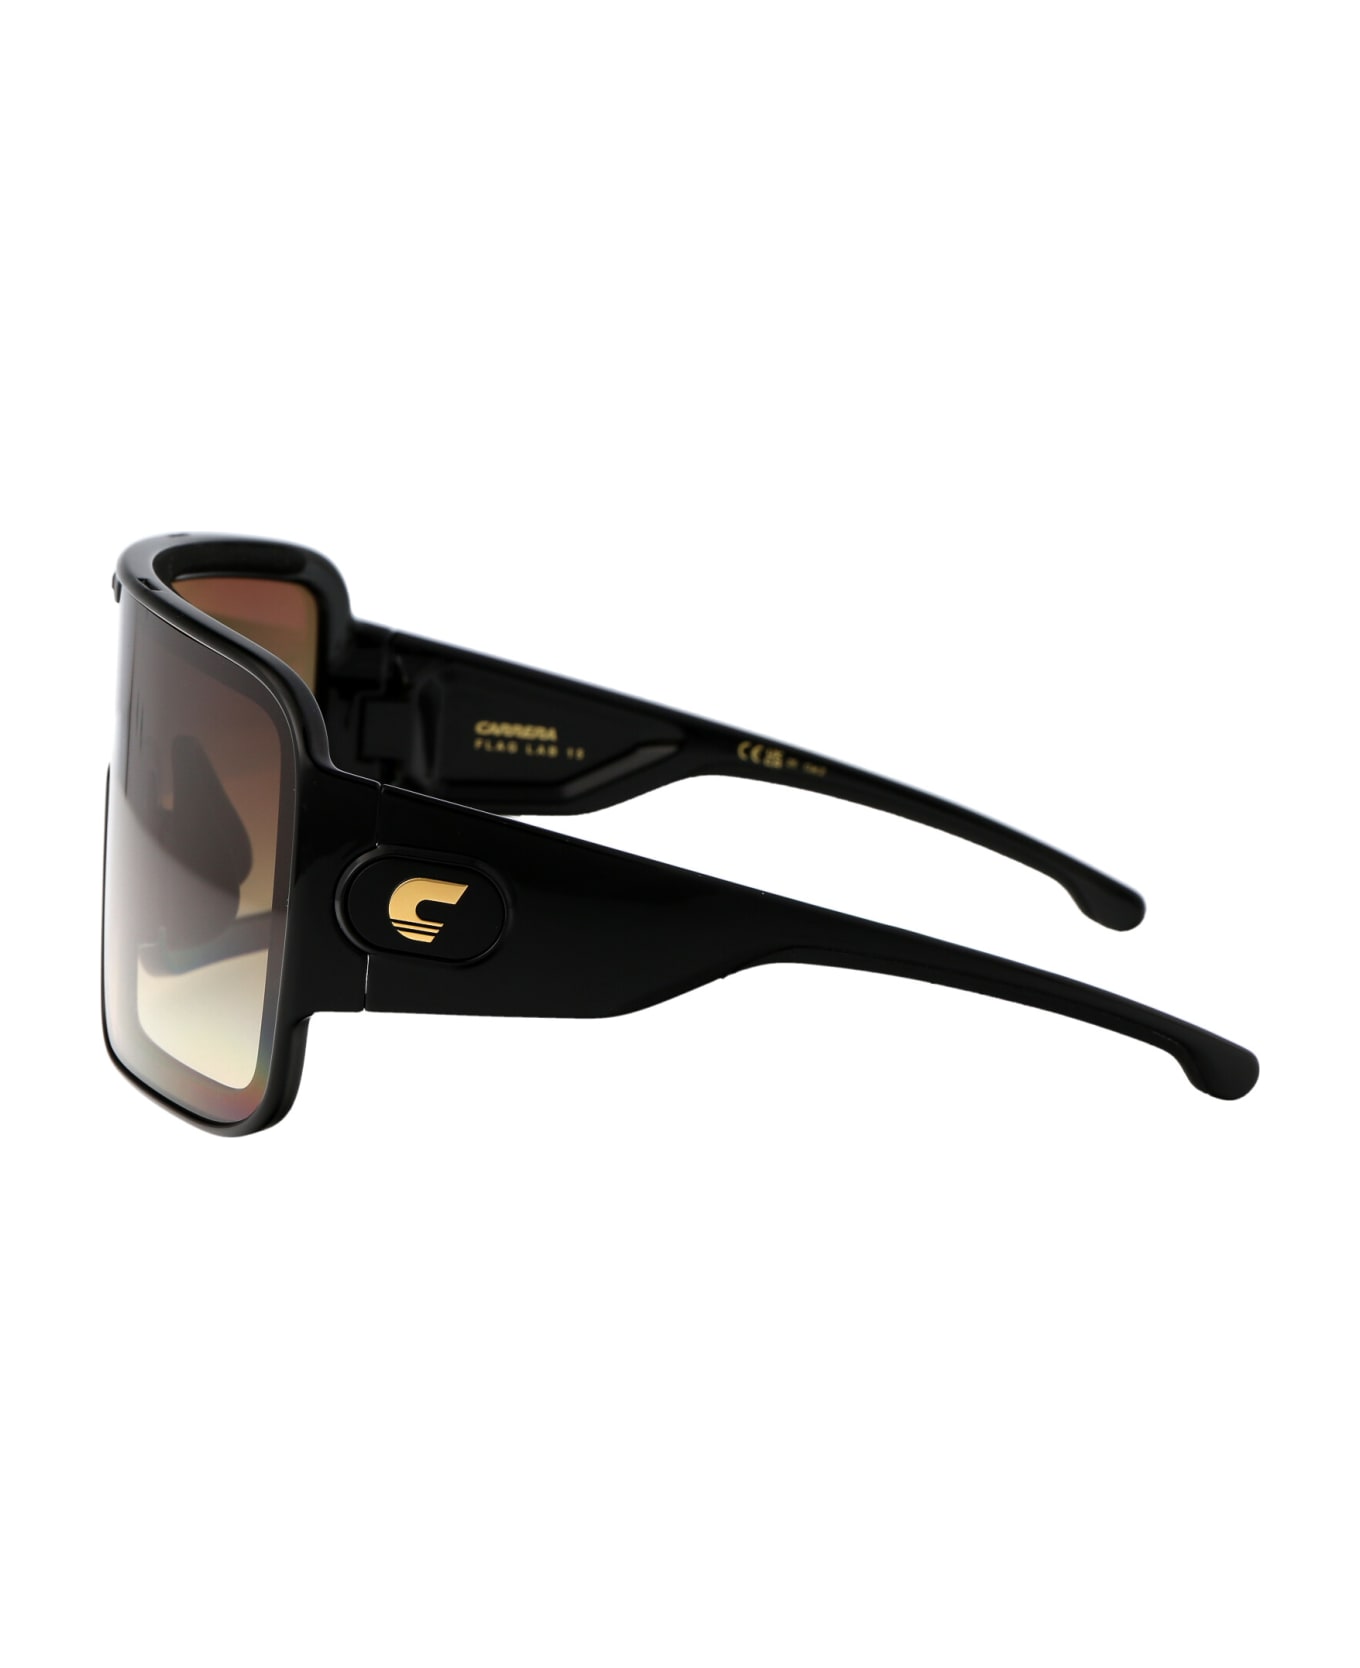 Carrera Flaglab 15 Sunglasses - 80786 BLACK サングラス